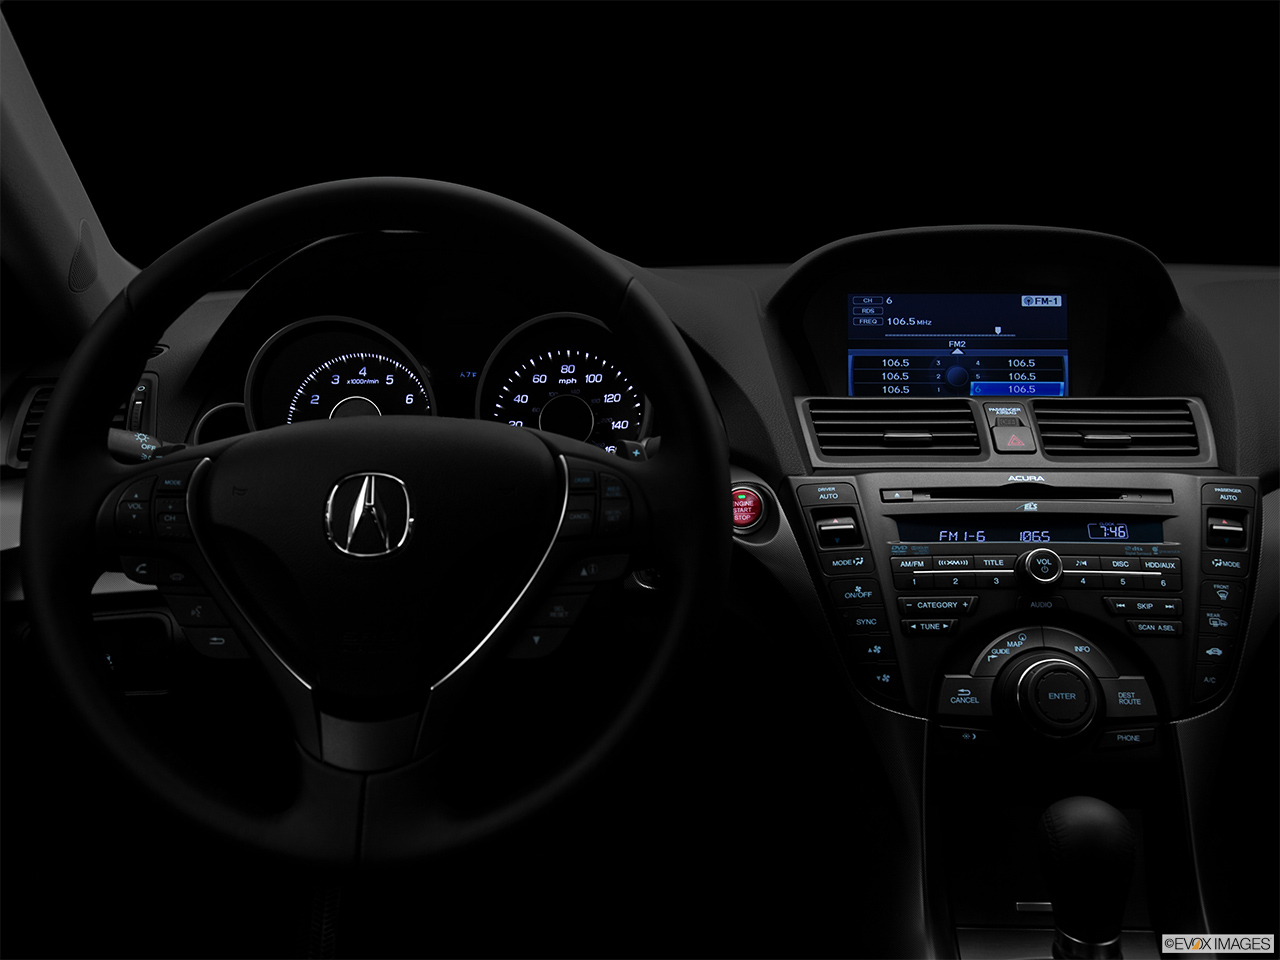 2012 Acura TL TL Centered wide dash shot - "night" shot. 